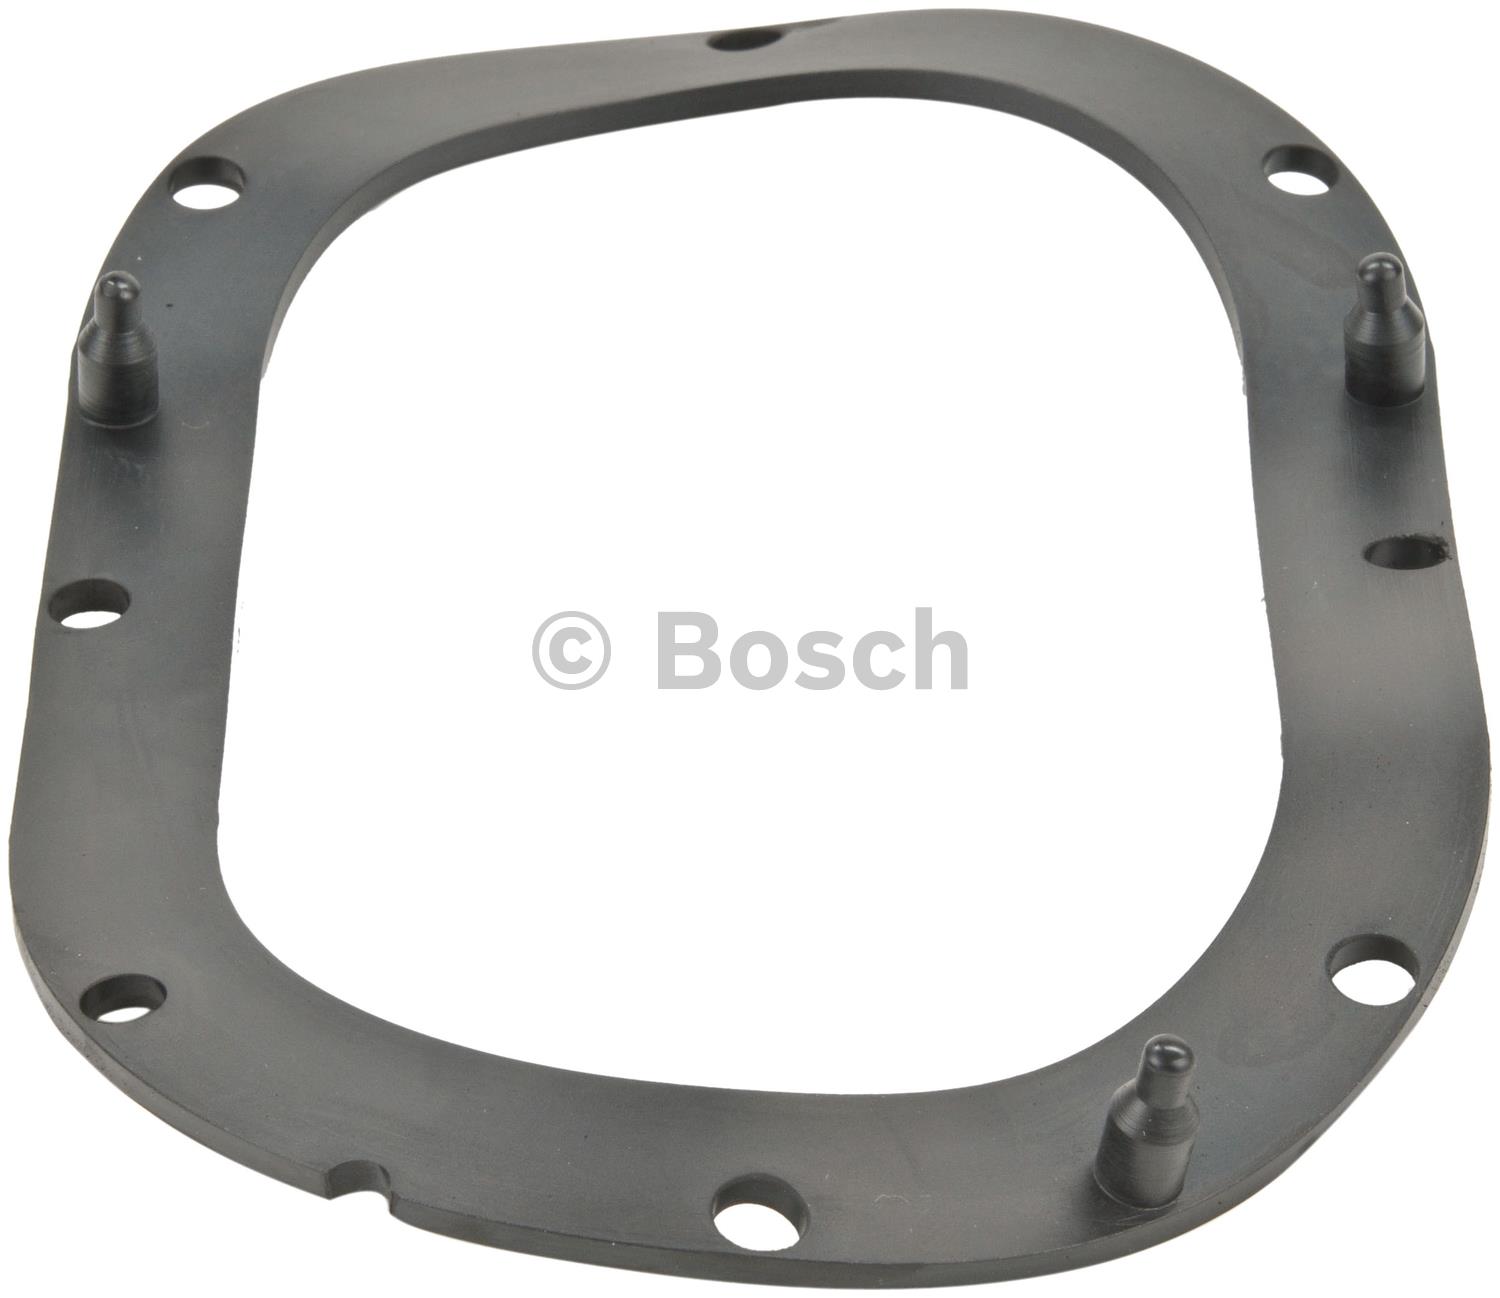 Picture of Bosch 68200 Fuel Pump Gasket